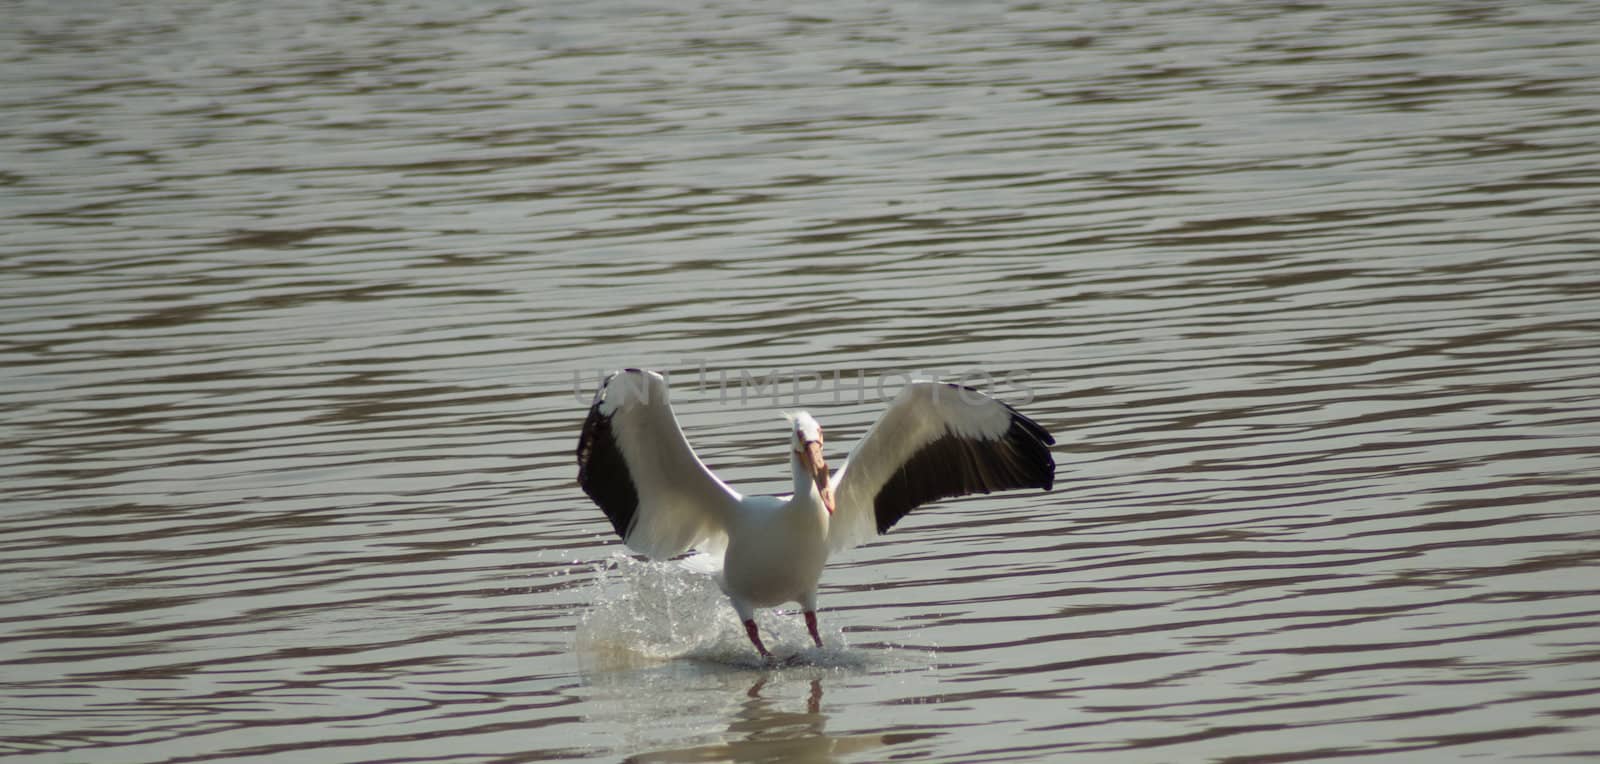 An adult pelican landing in some water